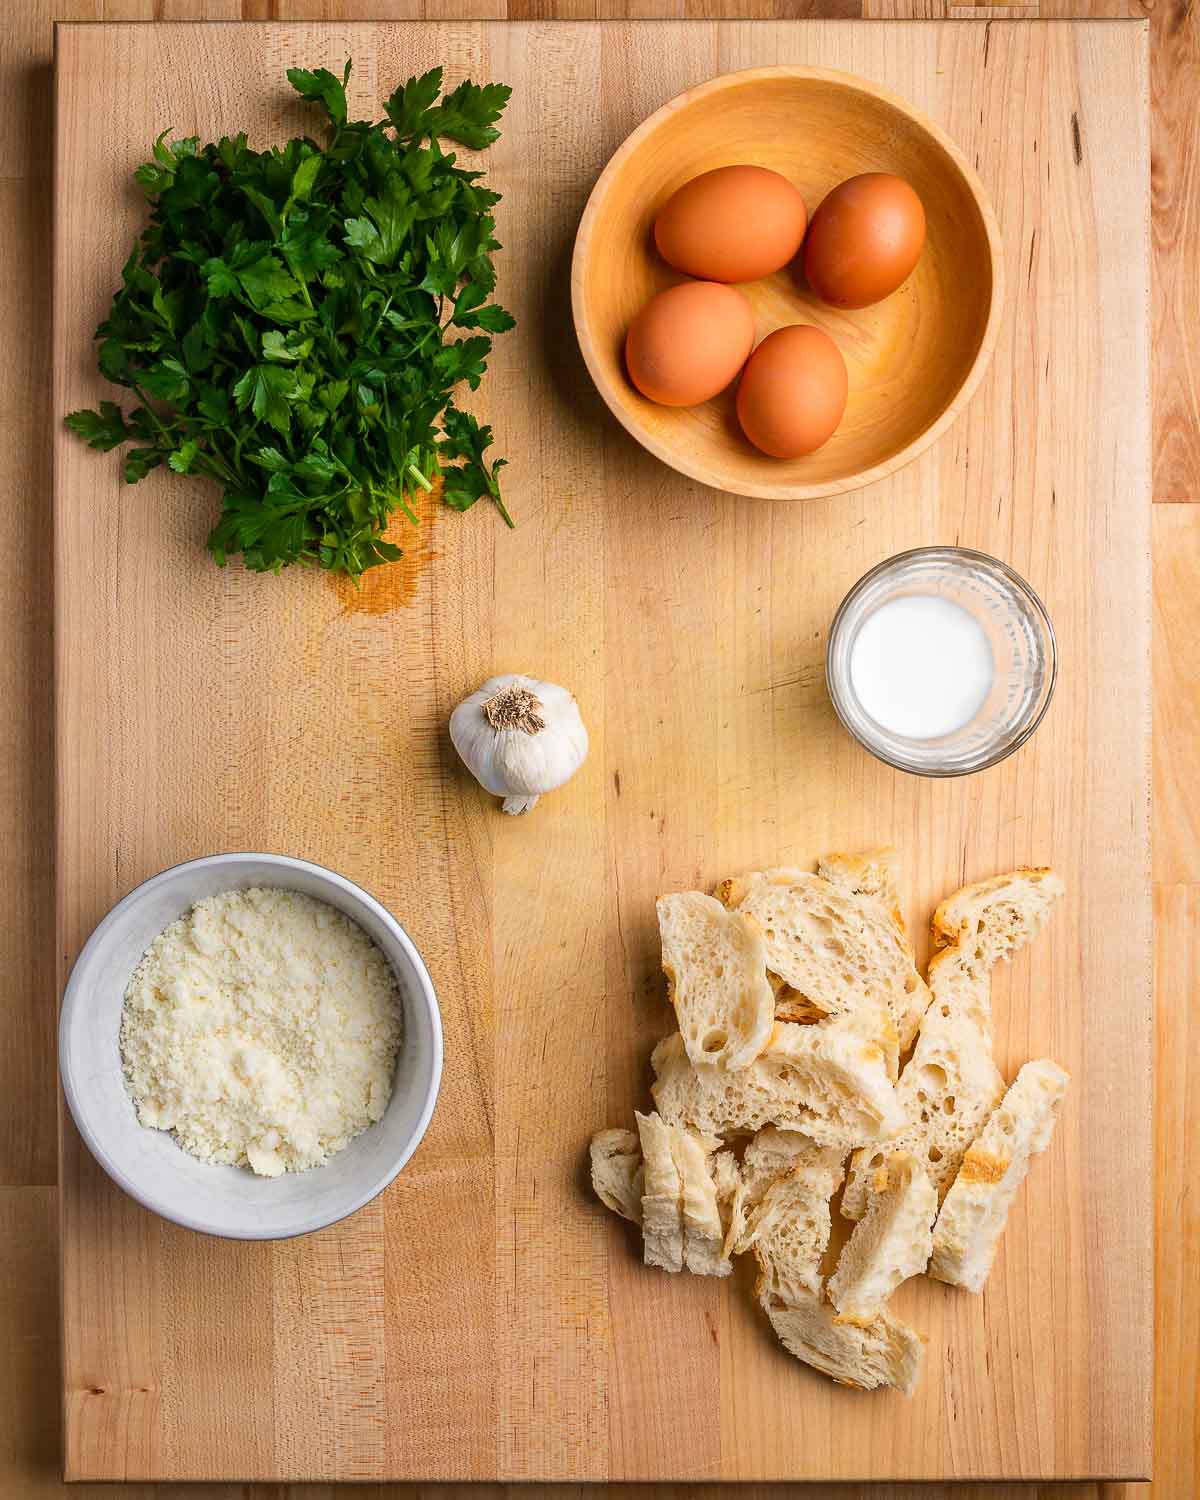 Ingredients shown: parsley, eggs, garlic, milk, Pecorino Romano, and bread.